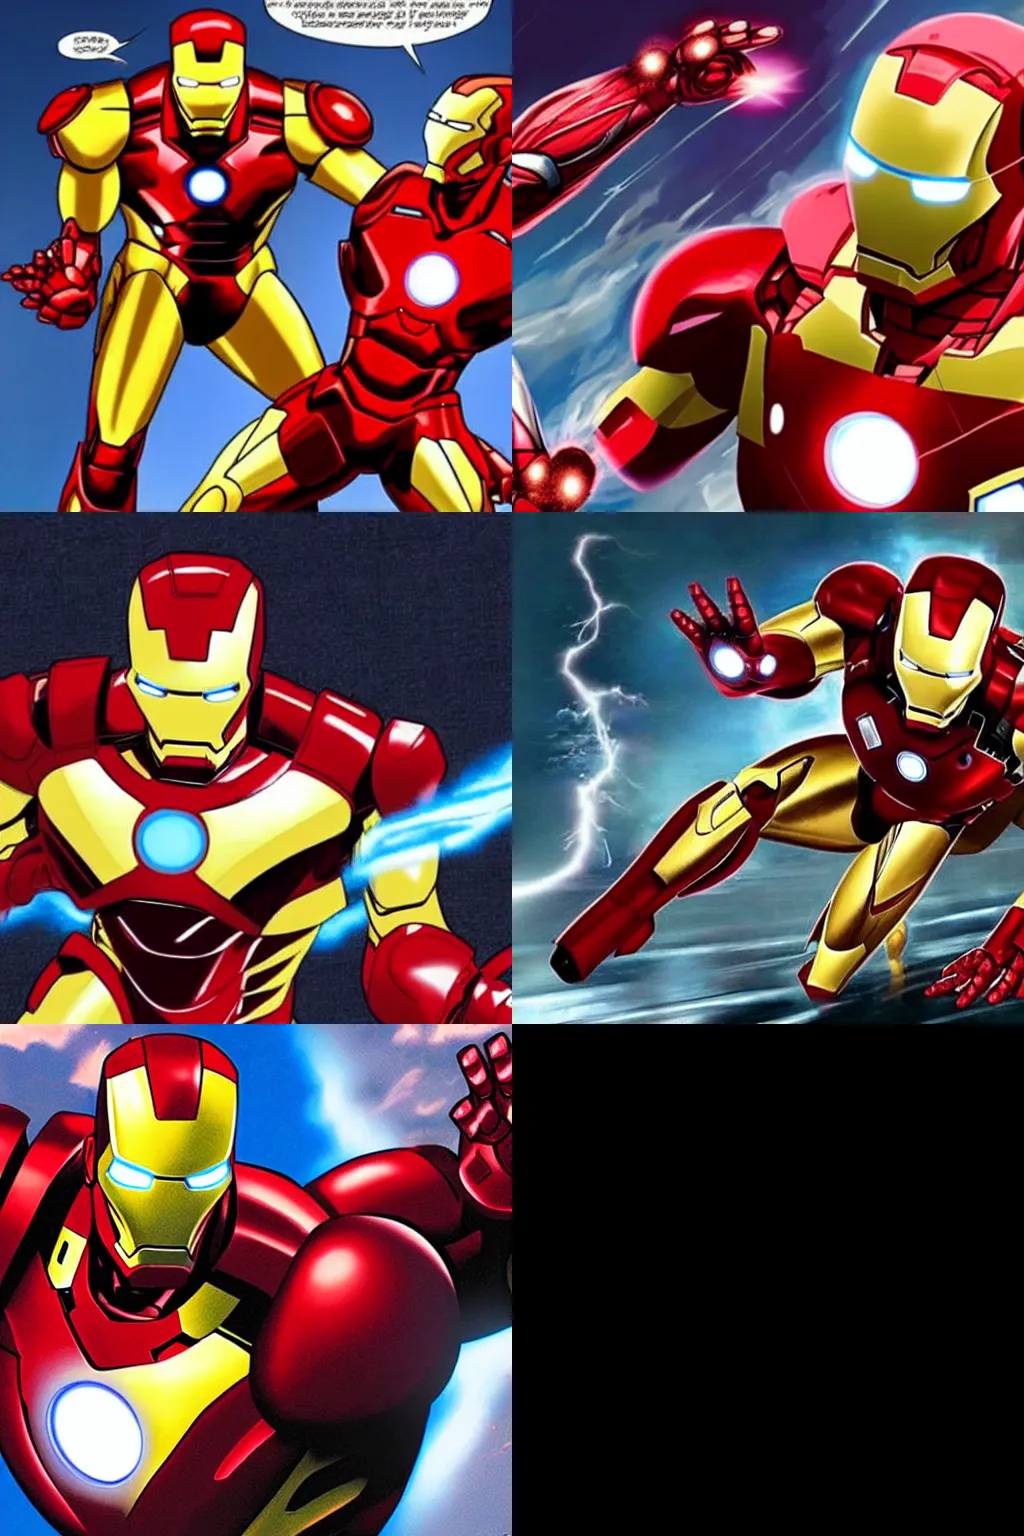 Prompt: Iron Man attacking Saitama, realistic